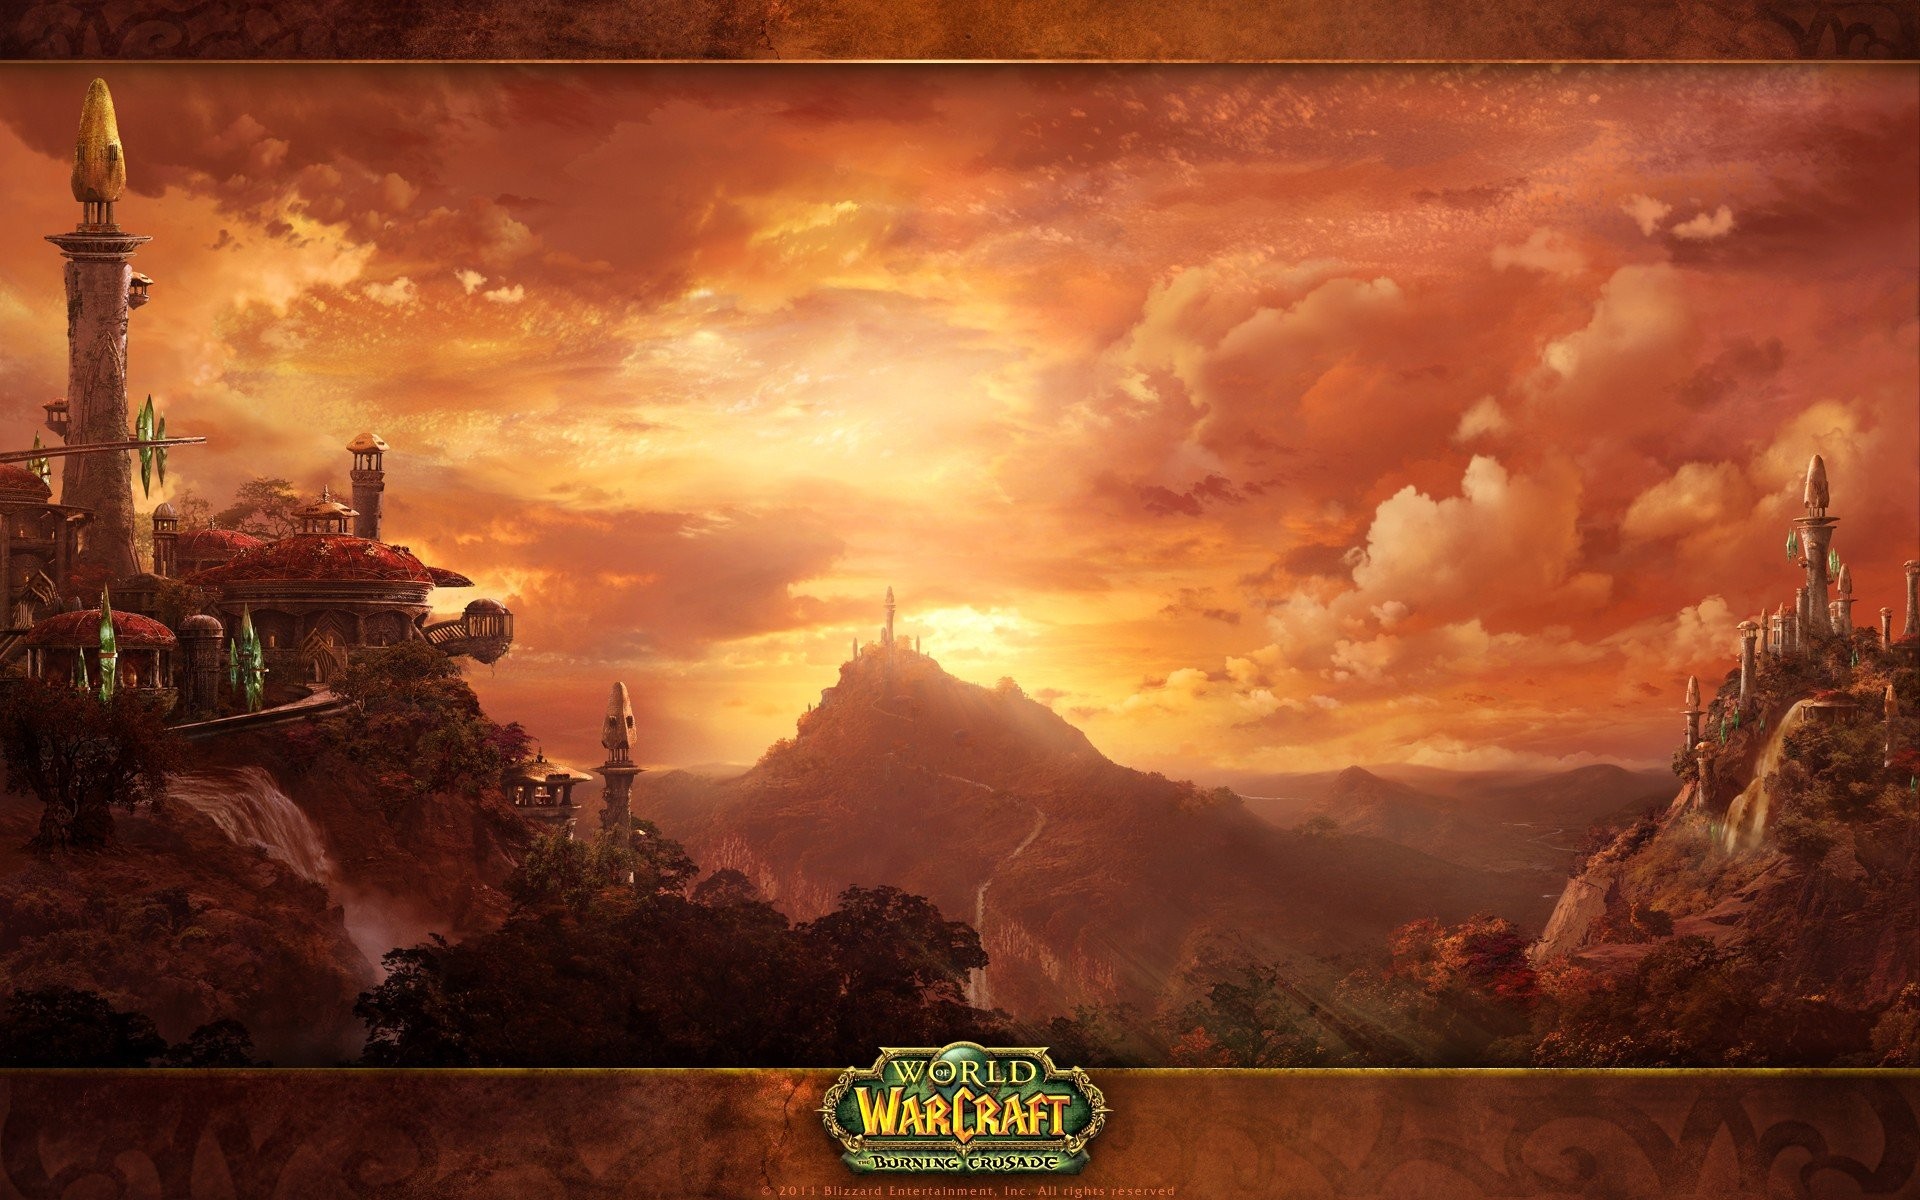 1920x1200 Video games World of Warcraft Blizzard Entertainment burning crusade  wallpaper |  | 330398 | WallpaperUP